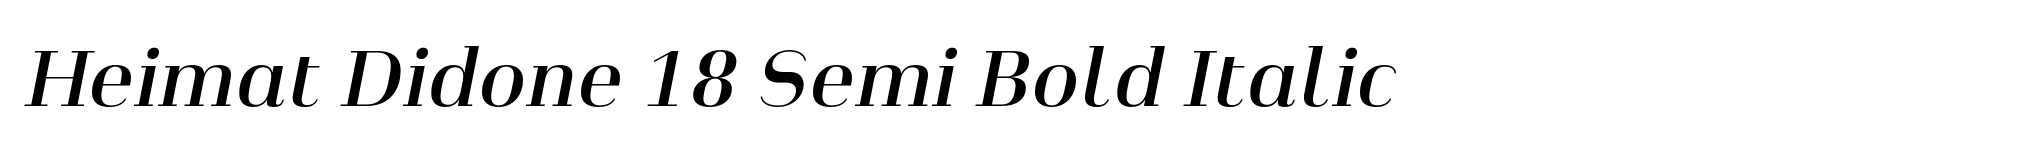 Heimat Didone 18 Semi Bold Italic image